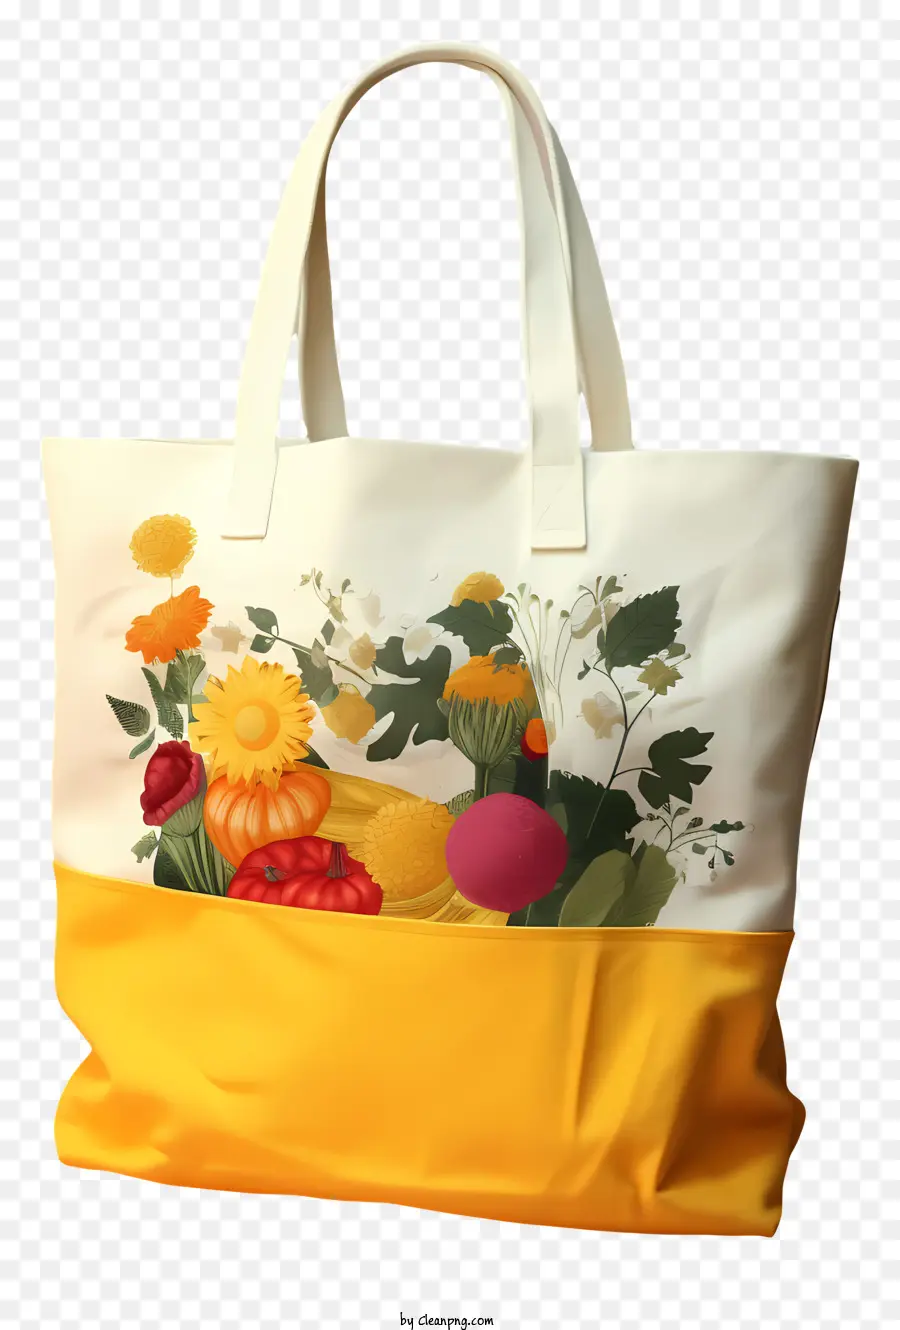 eco fabric cloth tote bag floral tote bag large tote bag white and yellow tote bag floral prints